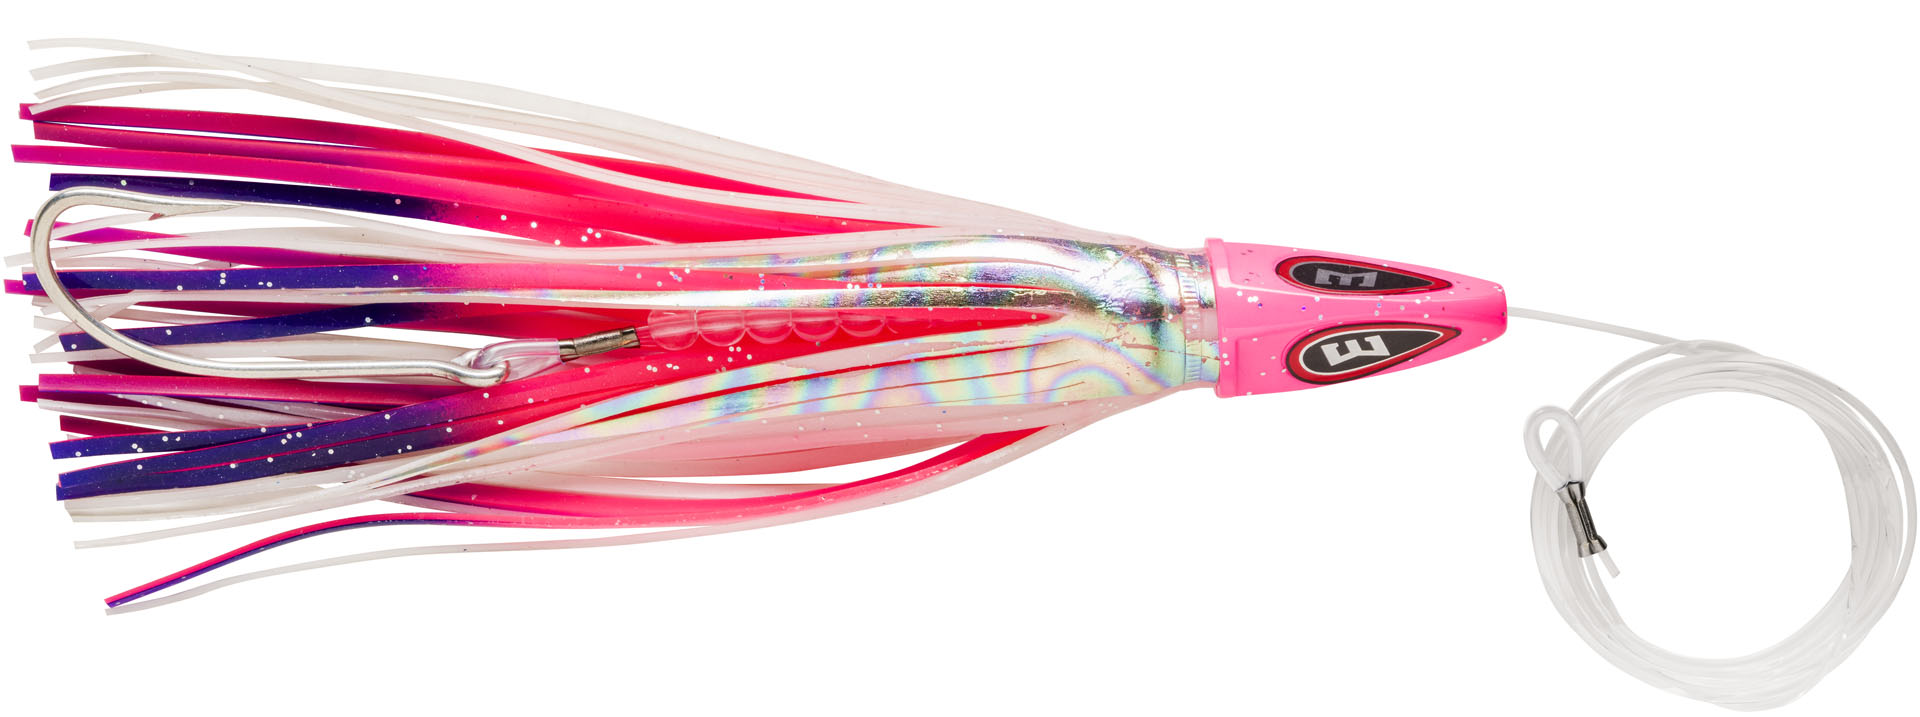 Williamson Hspeed Tuna Catcher Rig para Mar 19cm (99g) - Candy floss